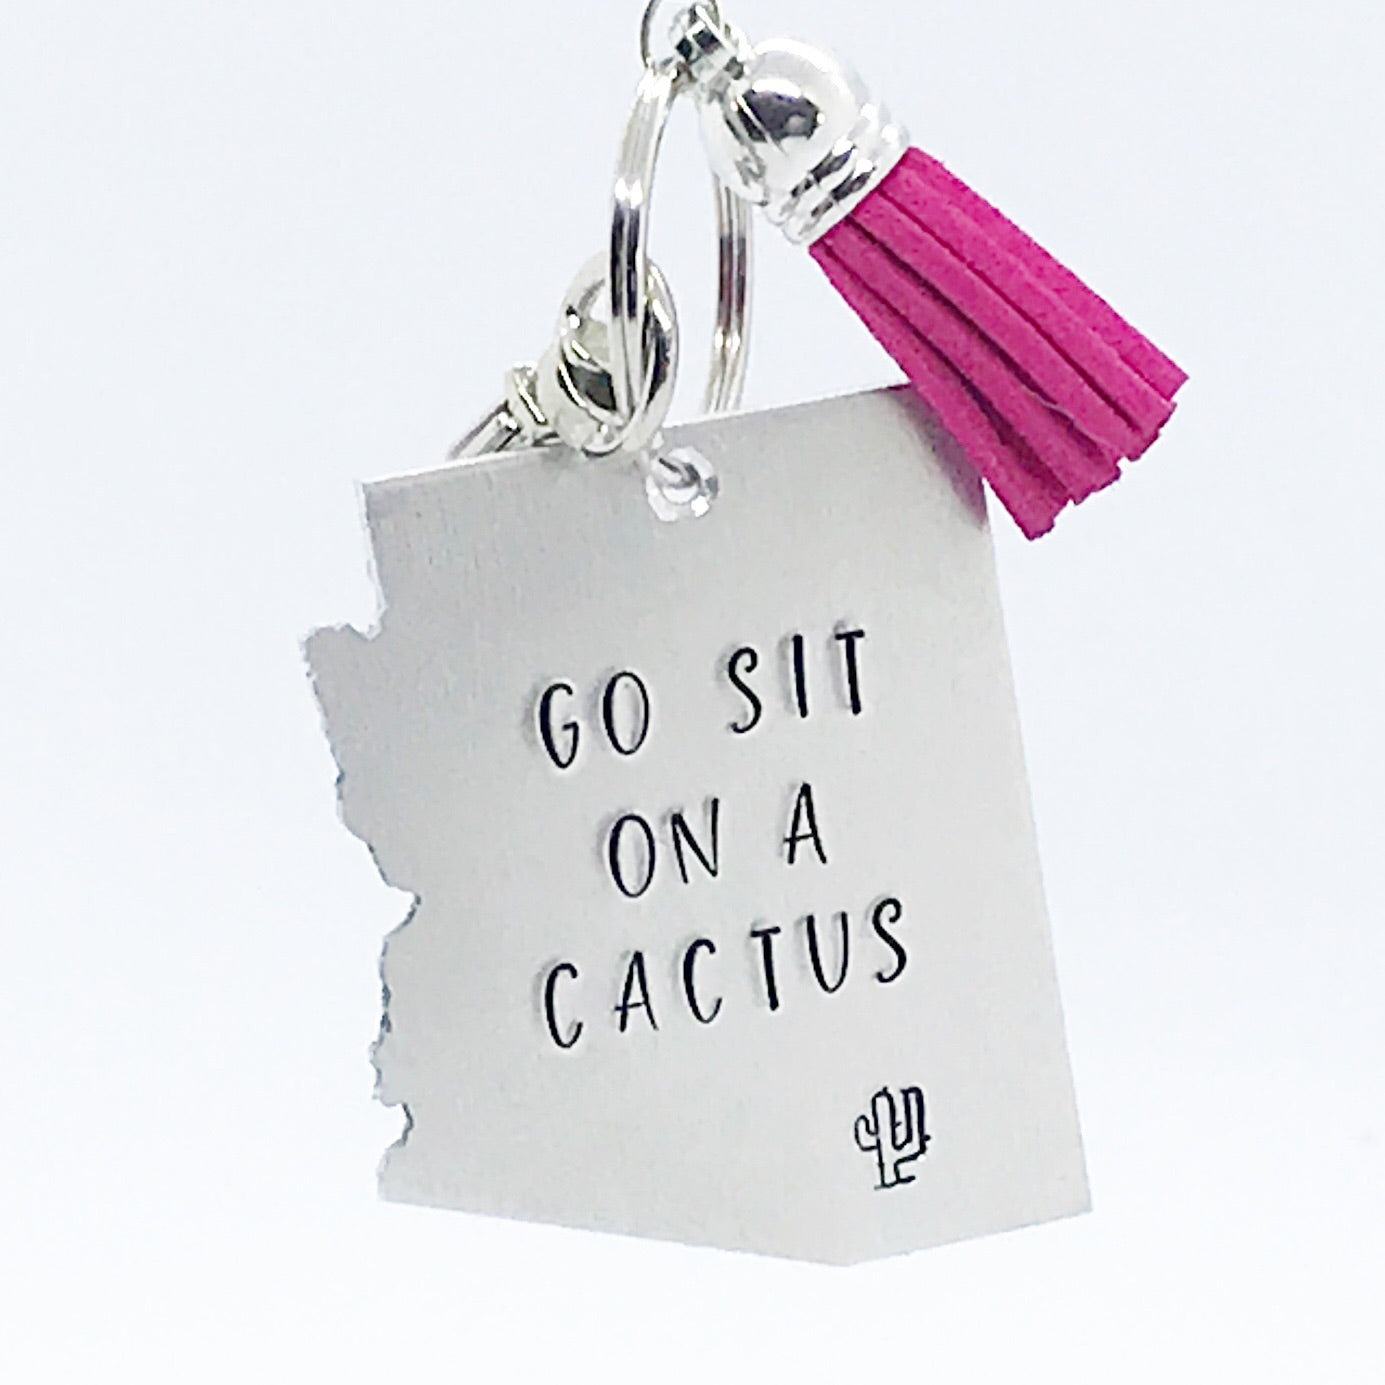 Key Chain - Arizona Shape - Go Sit On A Cactus